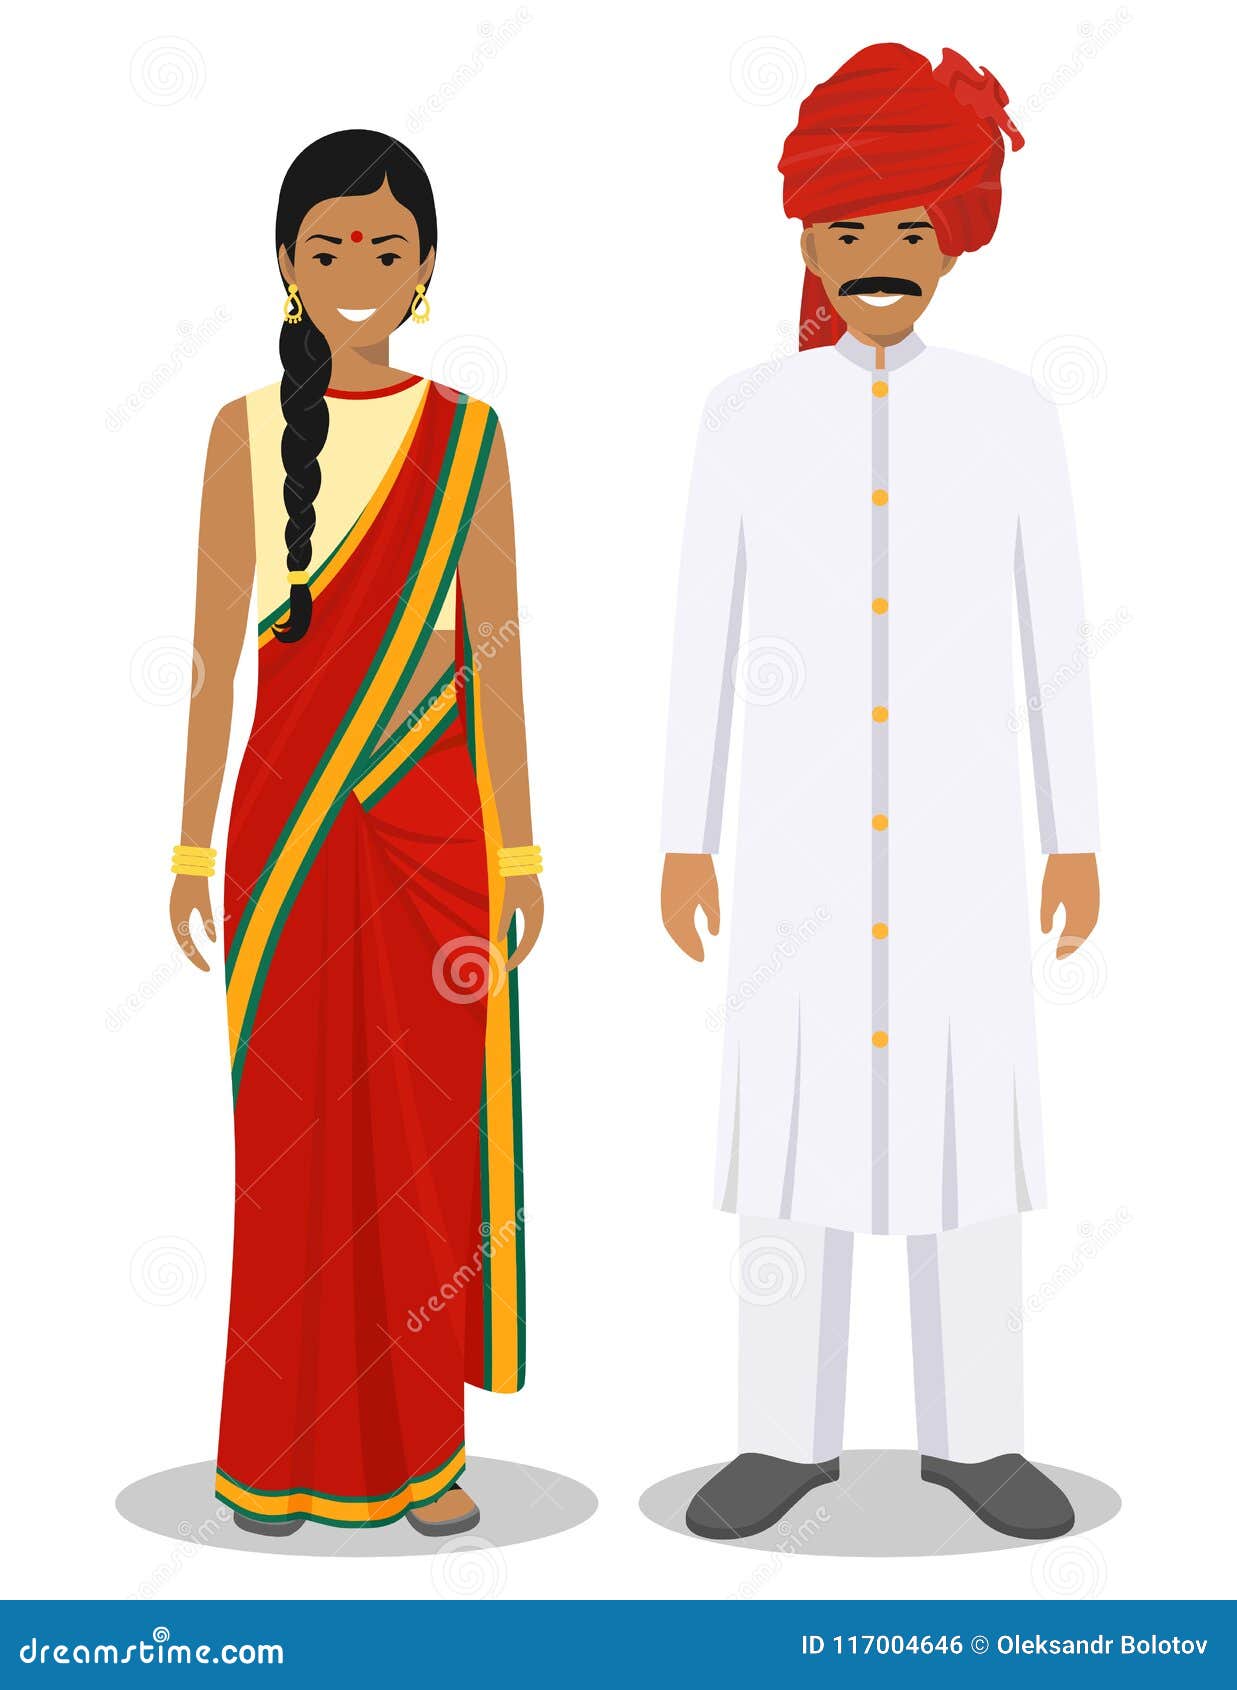 indian national dress men and women